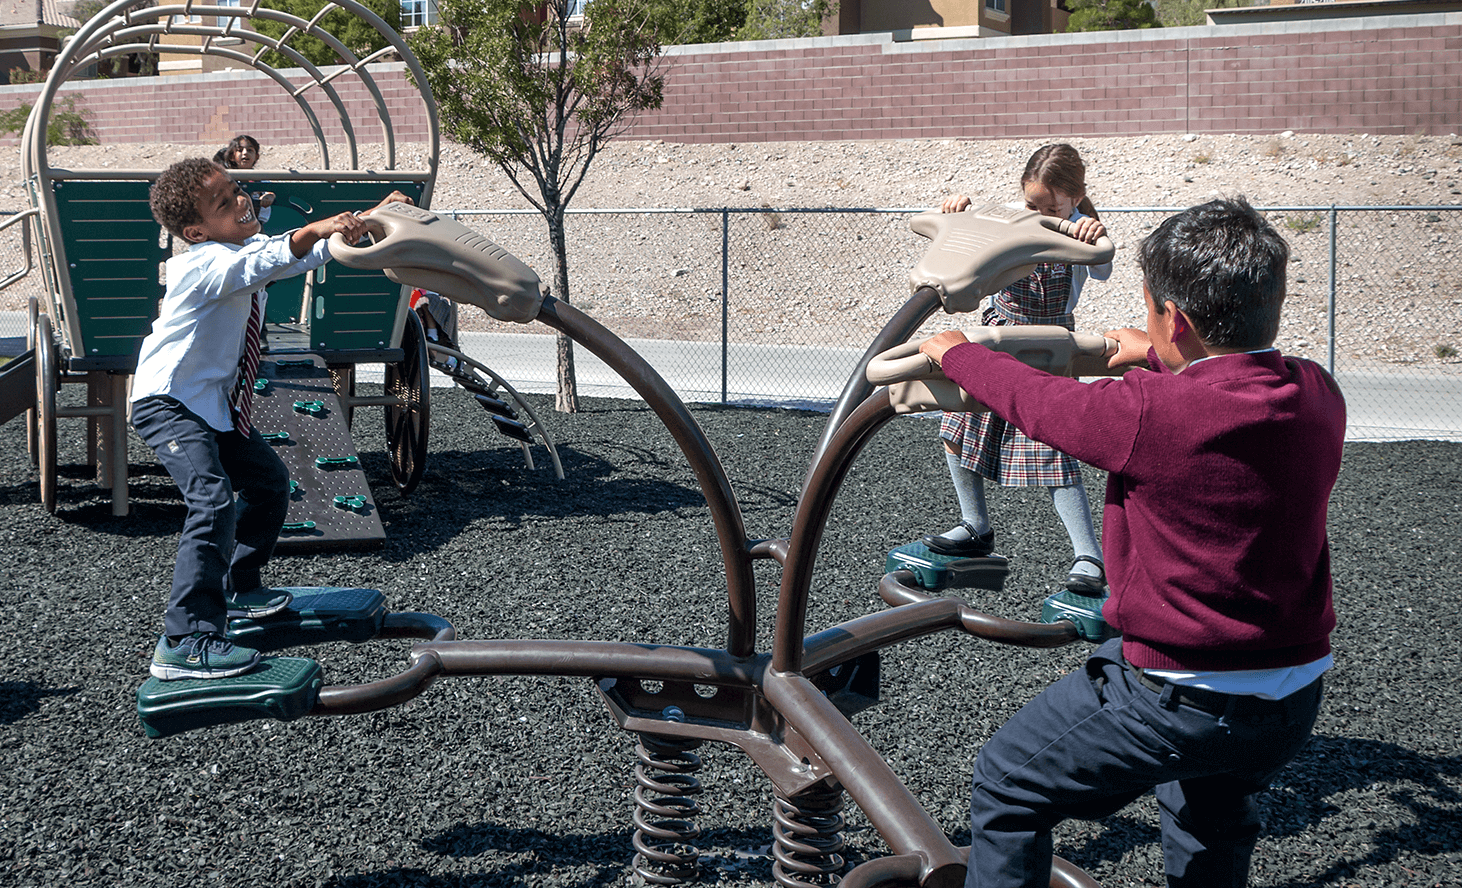 Playground Seesaw | Challenger School - Summerlin | Private School In Las Vegas, Nevada